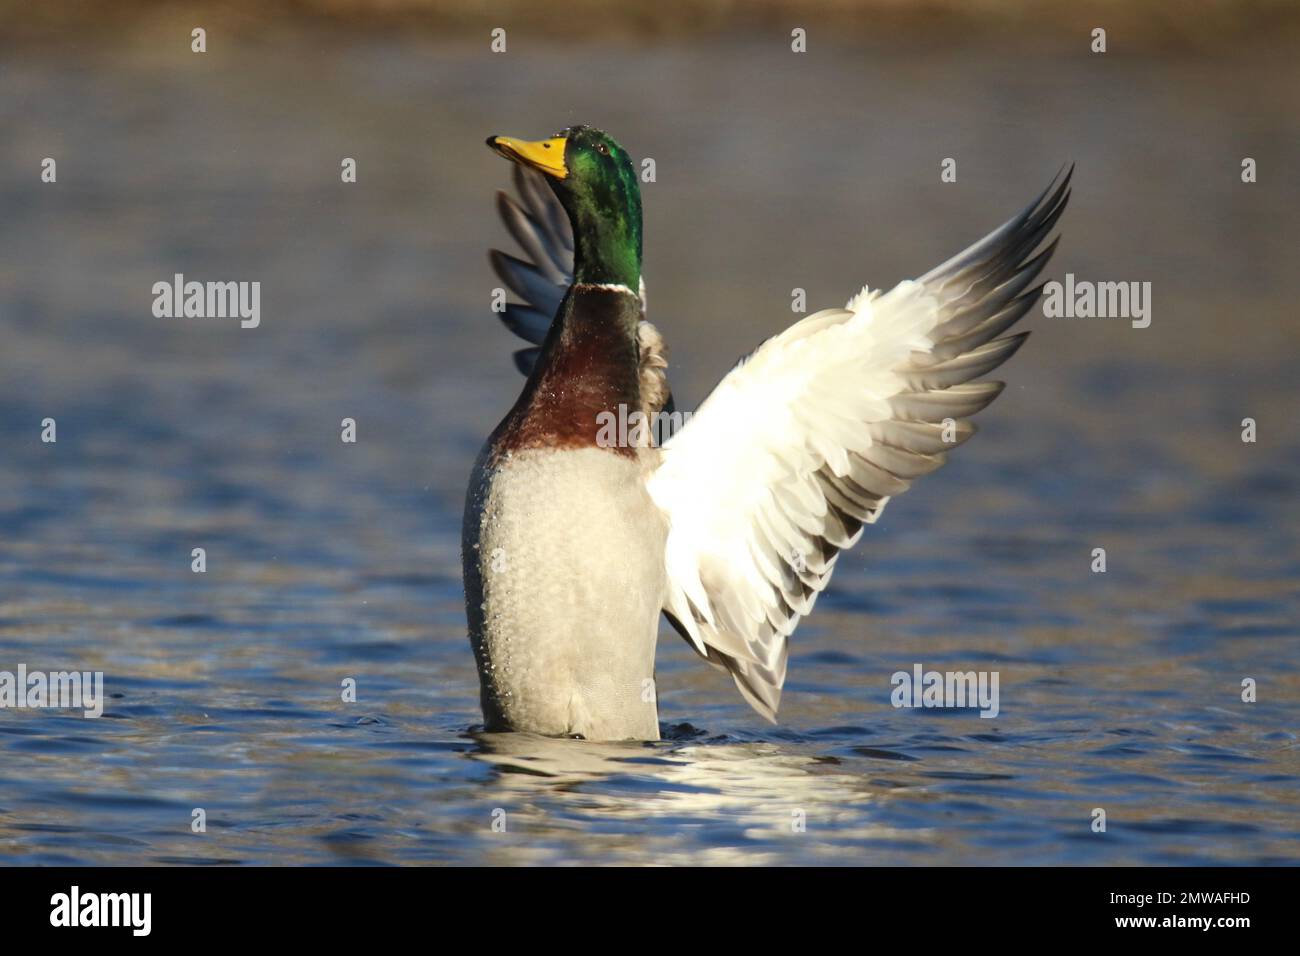 Drake mallard duck Anas platyrhynchos flapping his winnings on a lake in winter Stock Photo